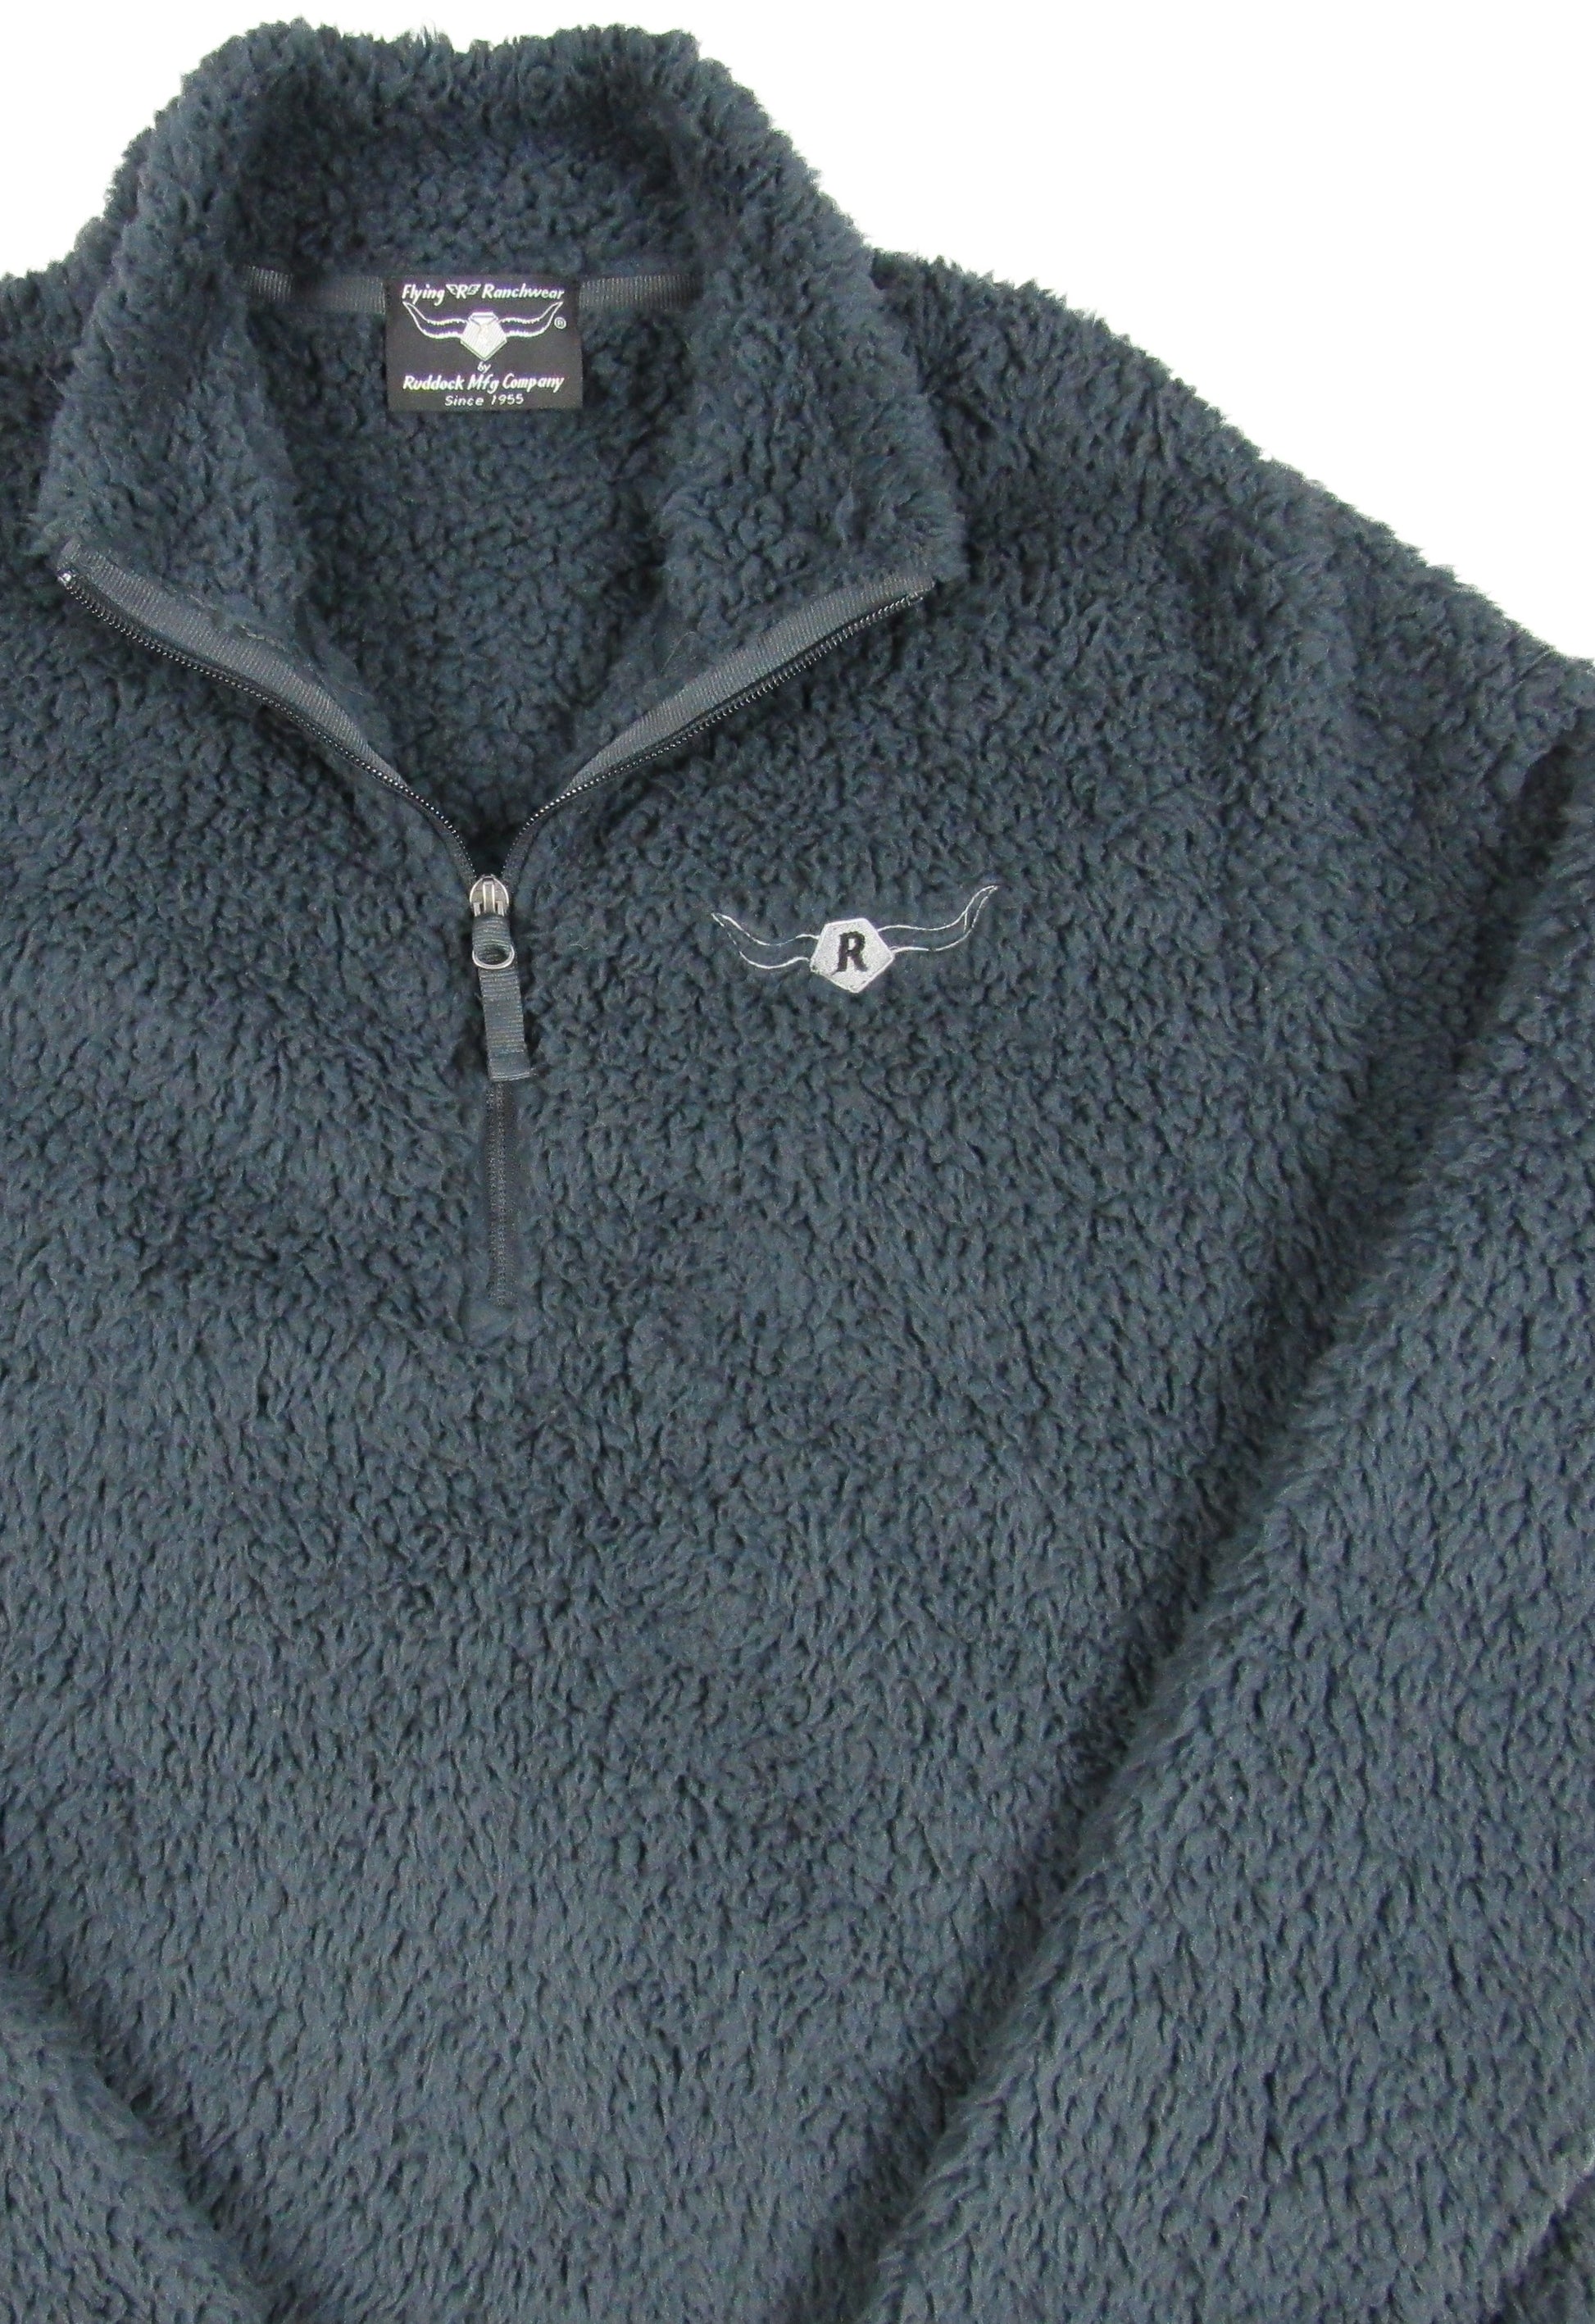 Charcoal gray sherpa fleece with 1/4 zipper by Flying R Ranchwear